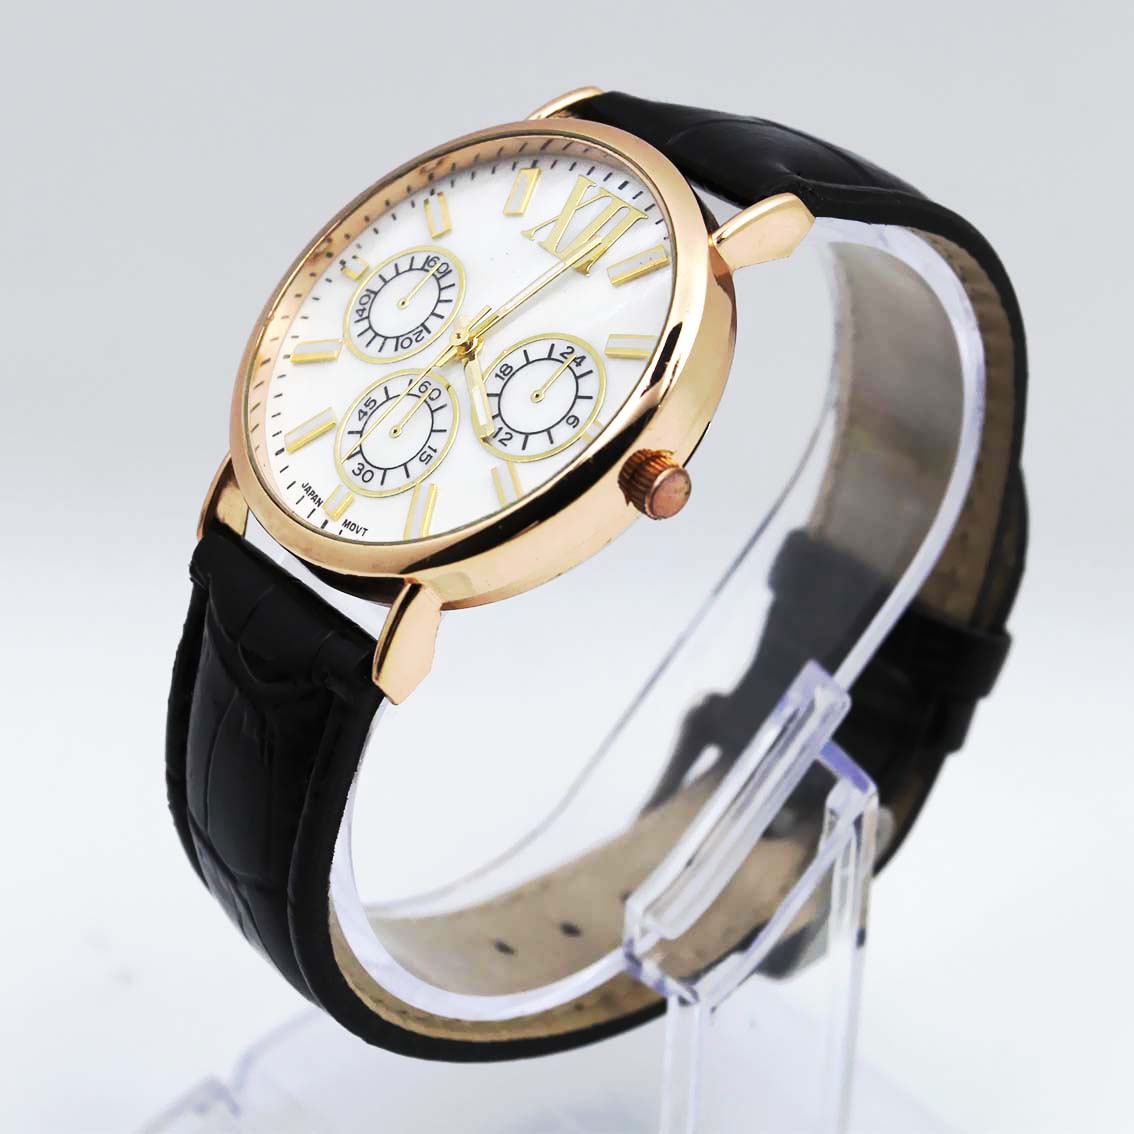 #02118Men's wristwatch quartz analog leather strap watch